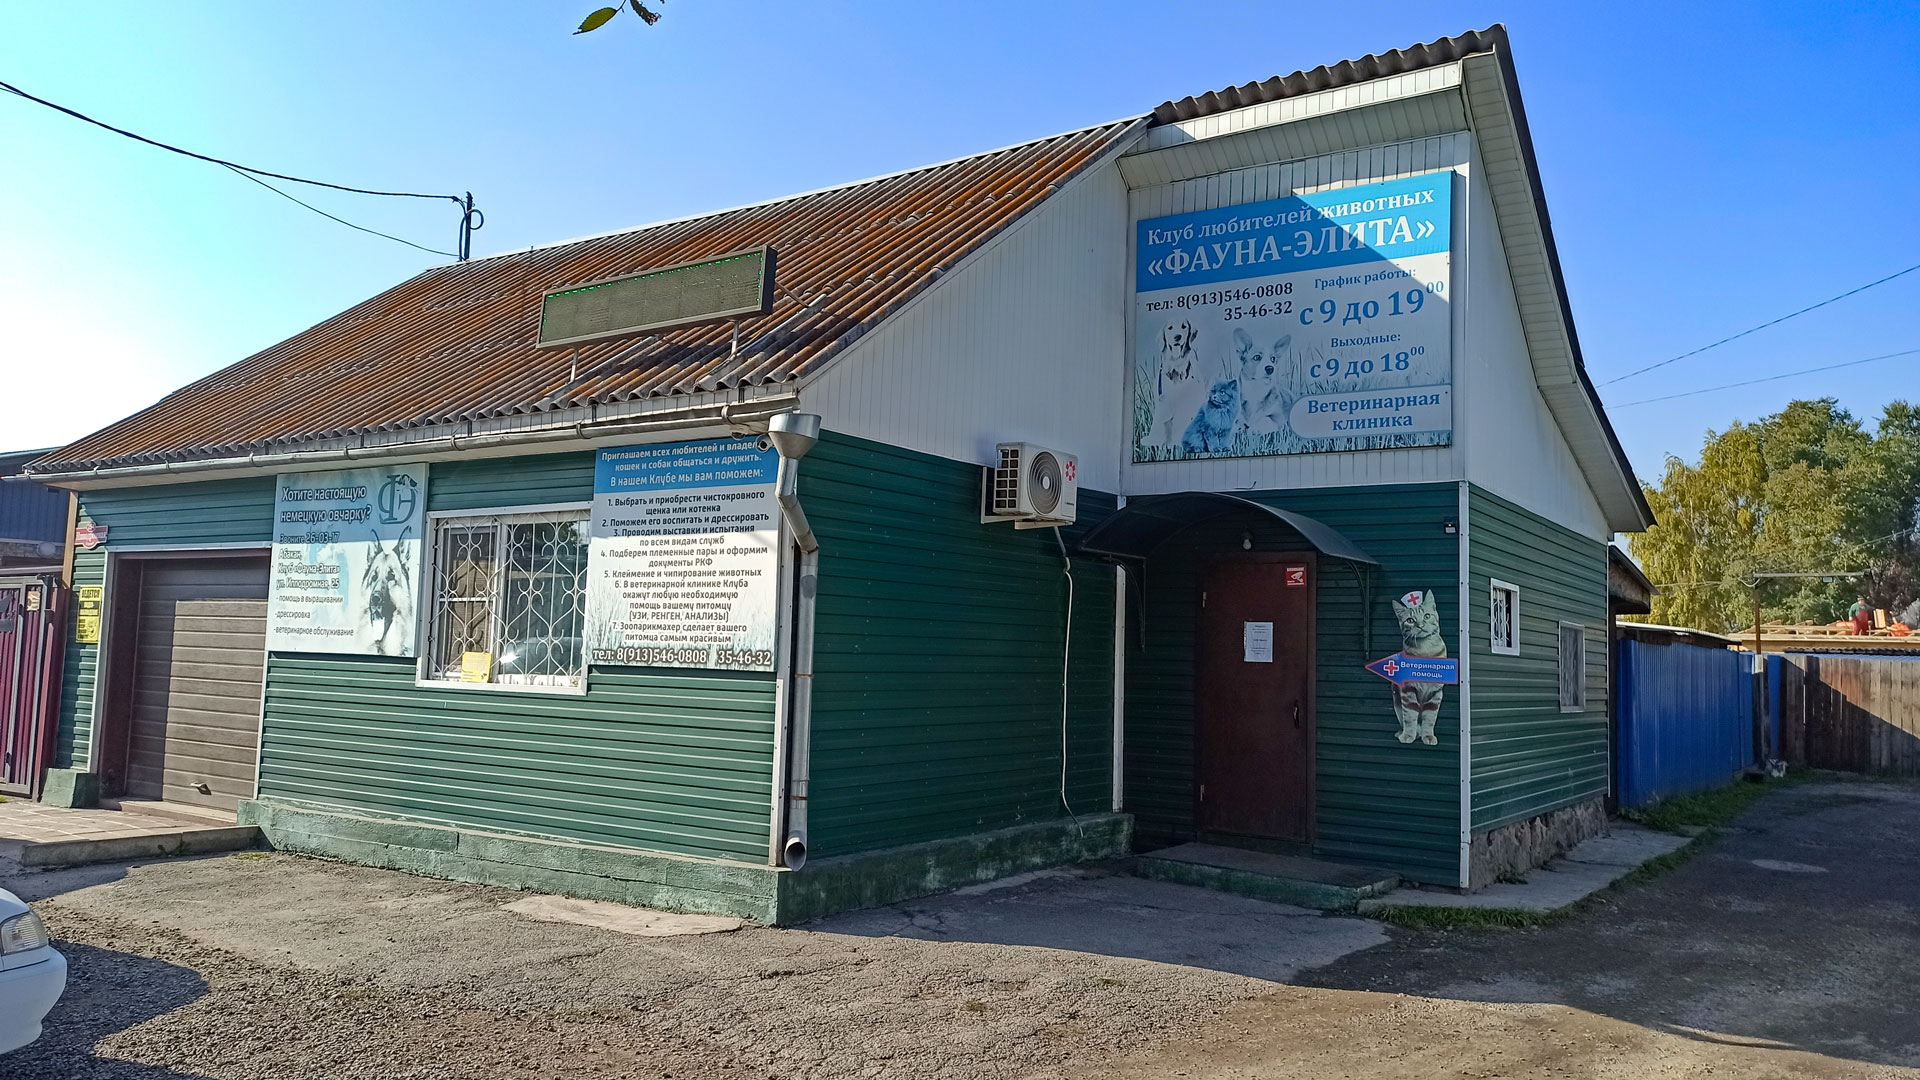 Ветеринарная клиника “Фауна-Элита” в г. Абакан на ул. Ипподромная.